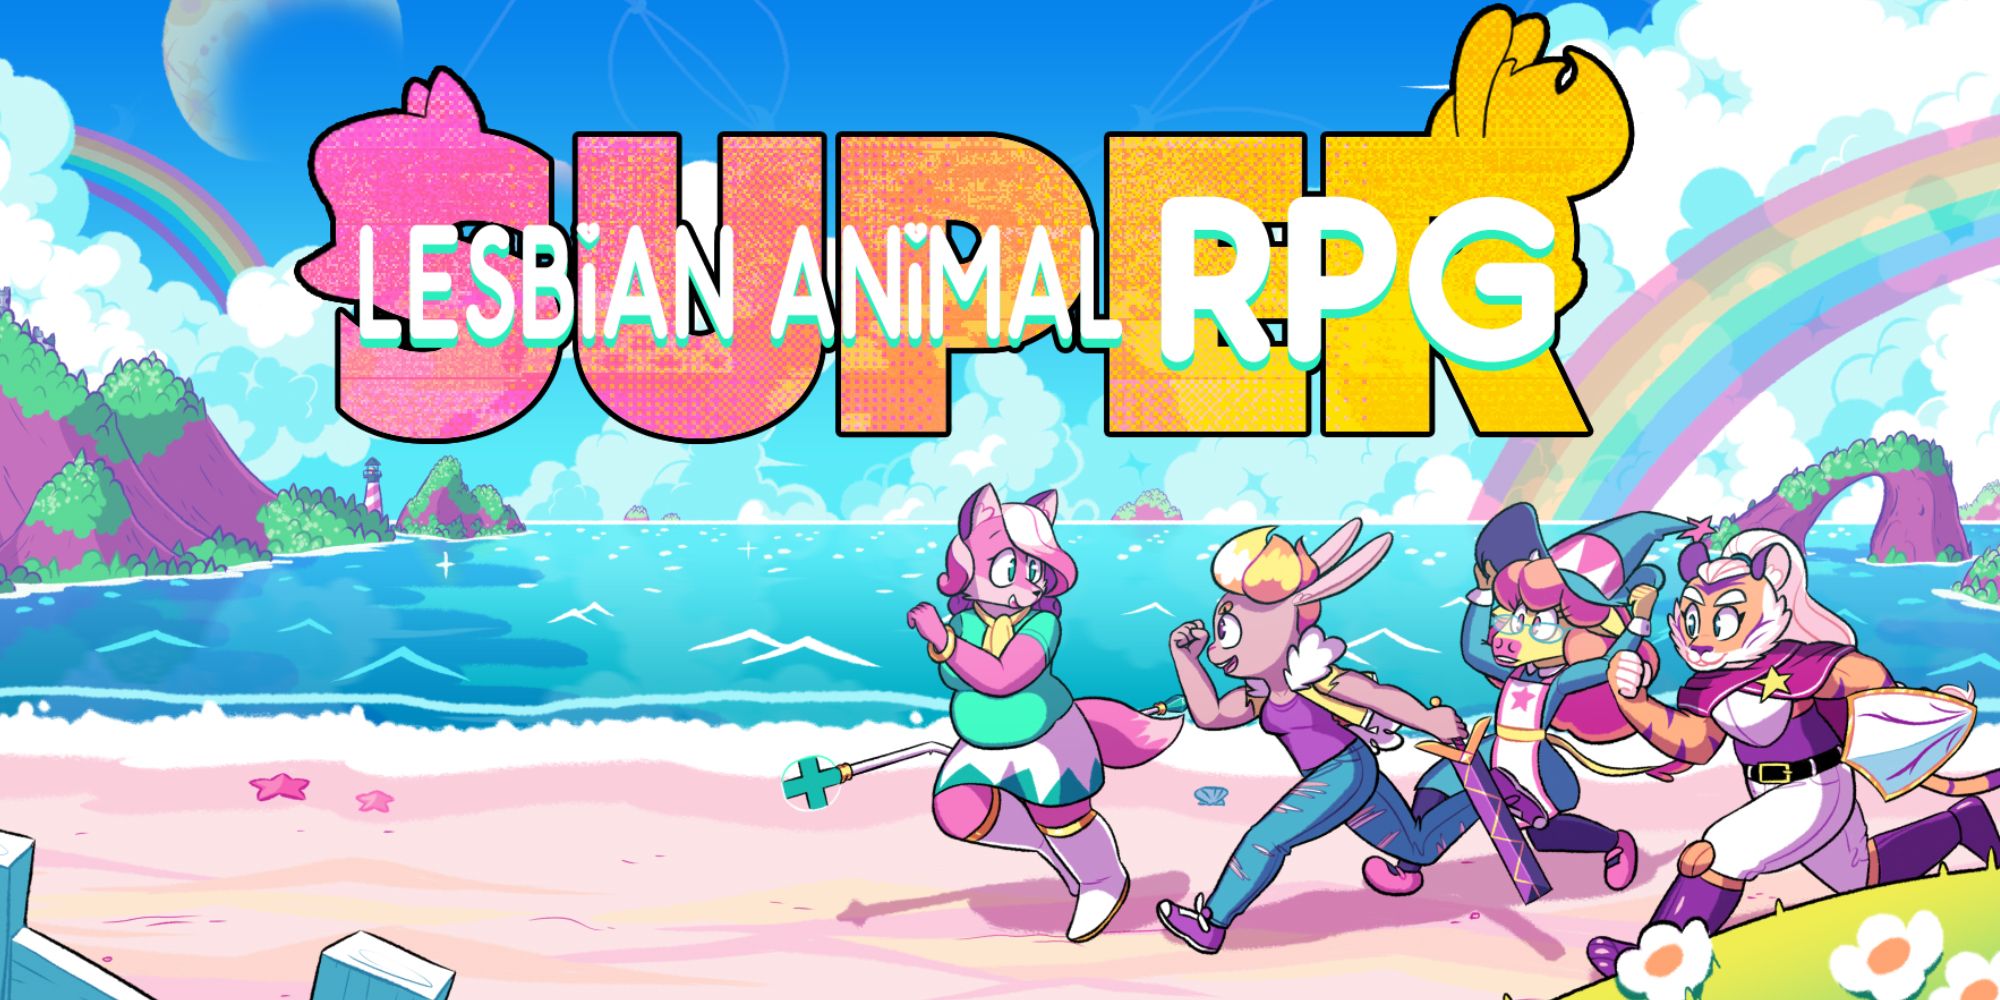 Super Lesbian Animal RPG trans lesbian protagonist cute turn-based rpg adventure